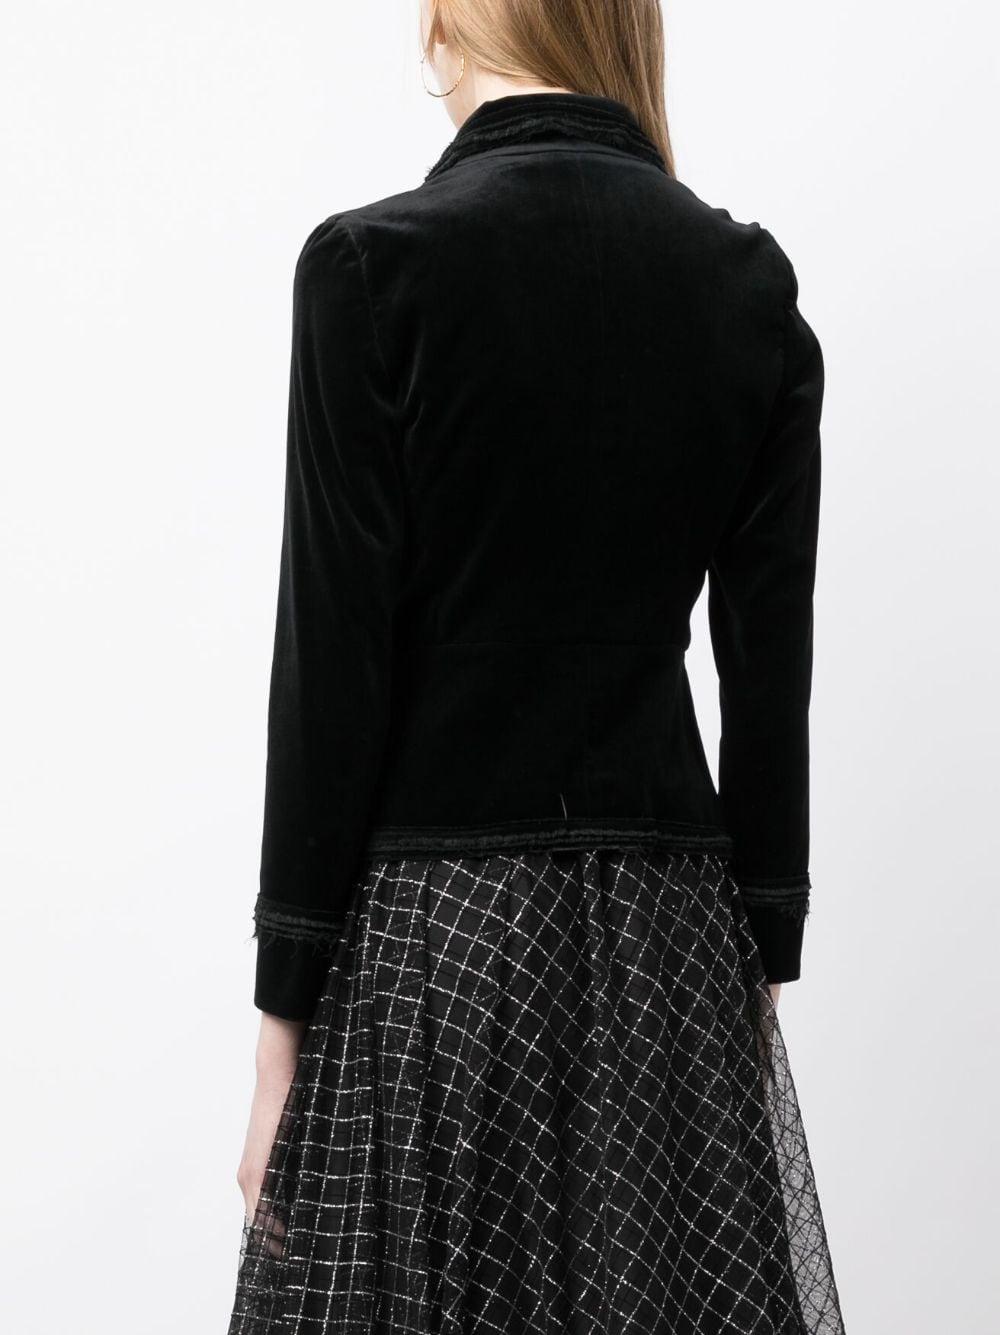 Chanel Claudia Schiffer CC Patch Black Jacket 7